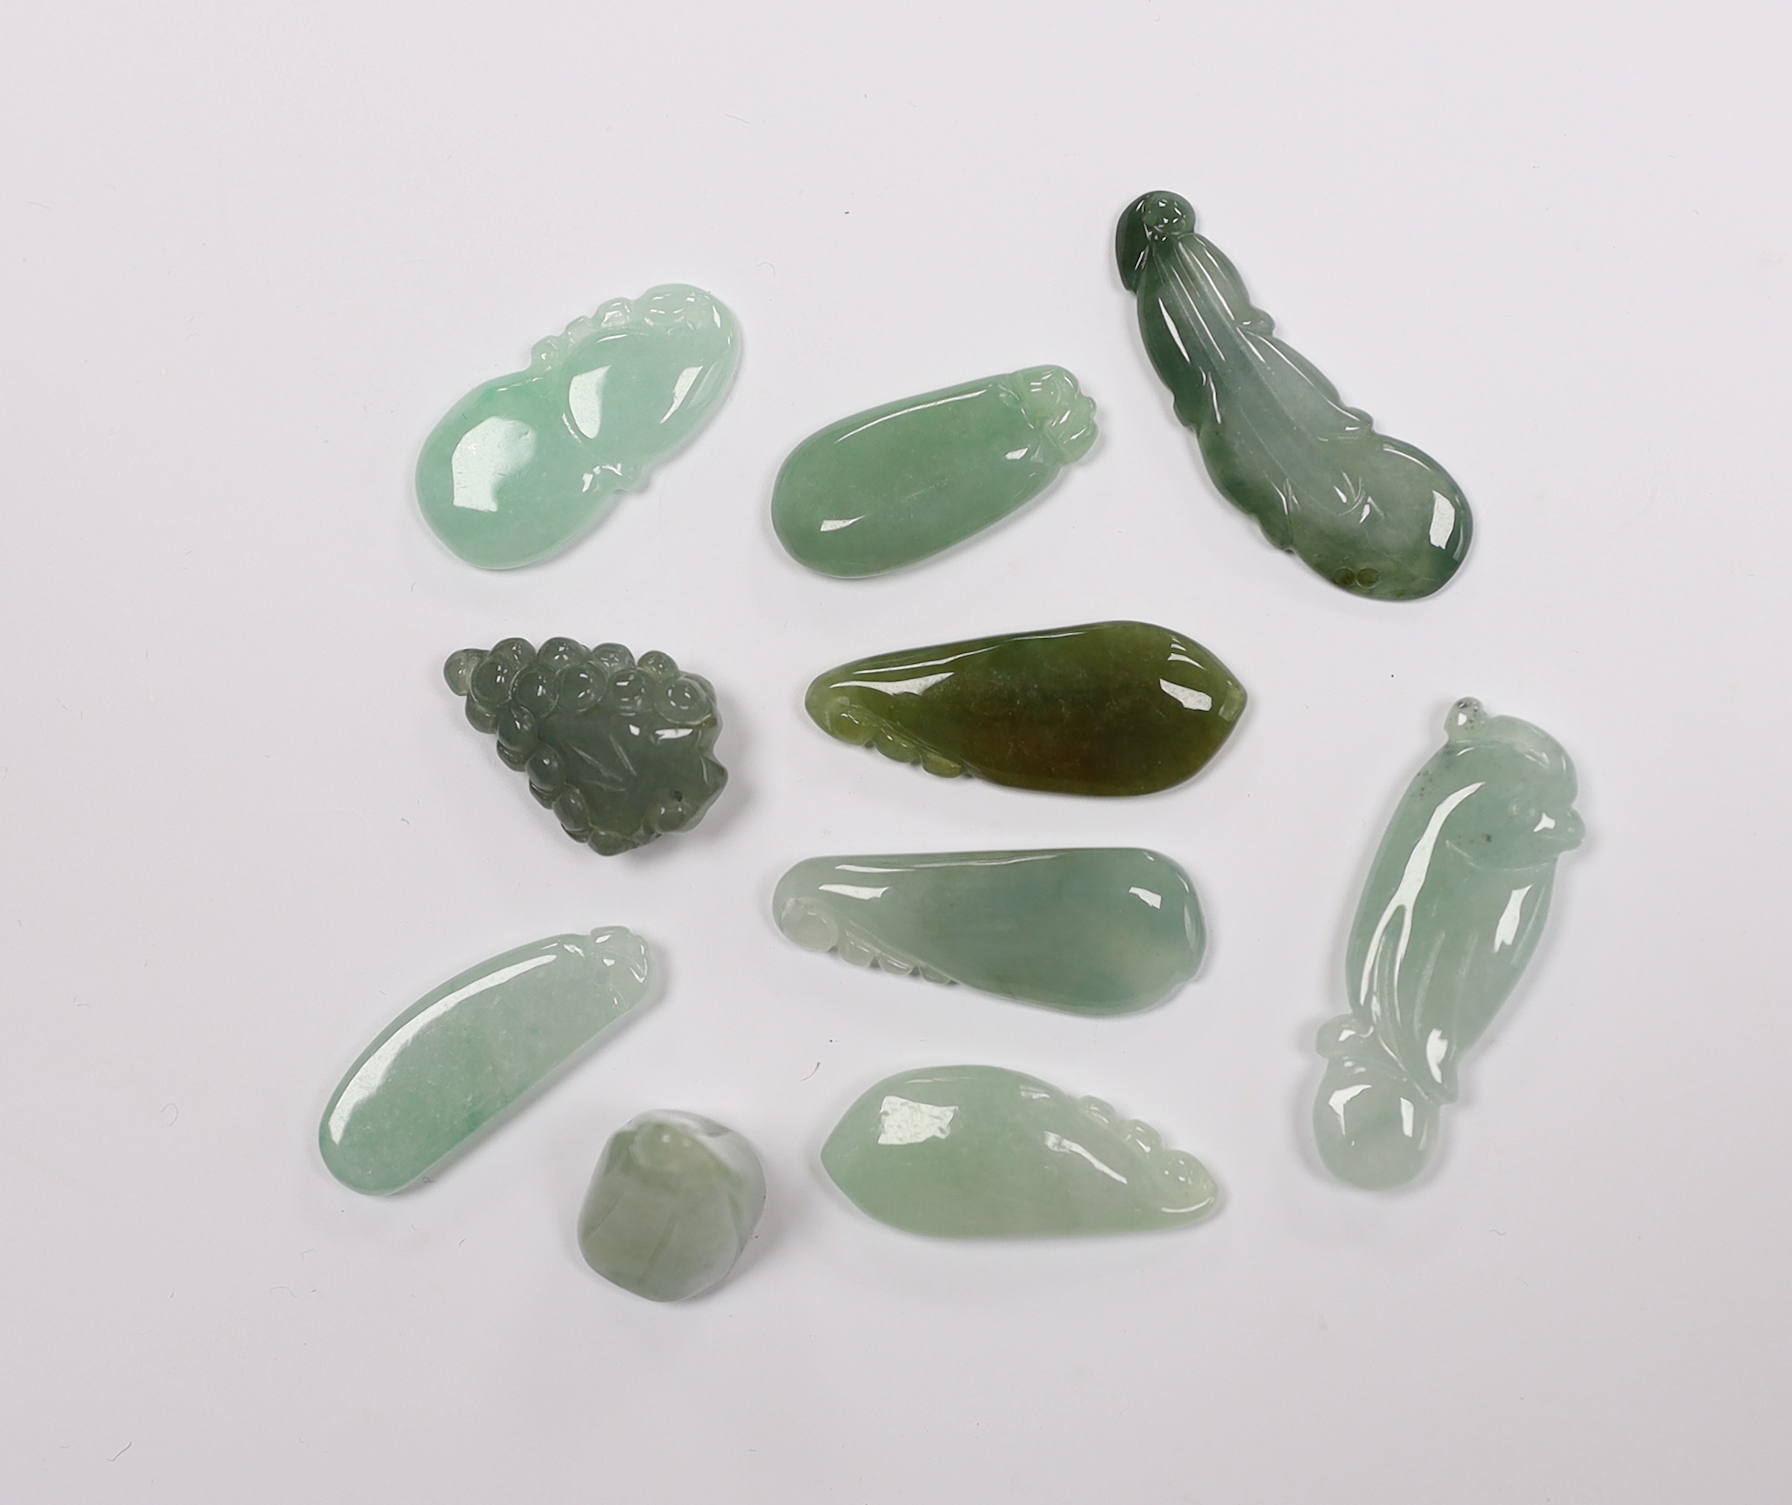 Ten various Chinese carved jadeite pendants